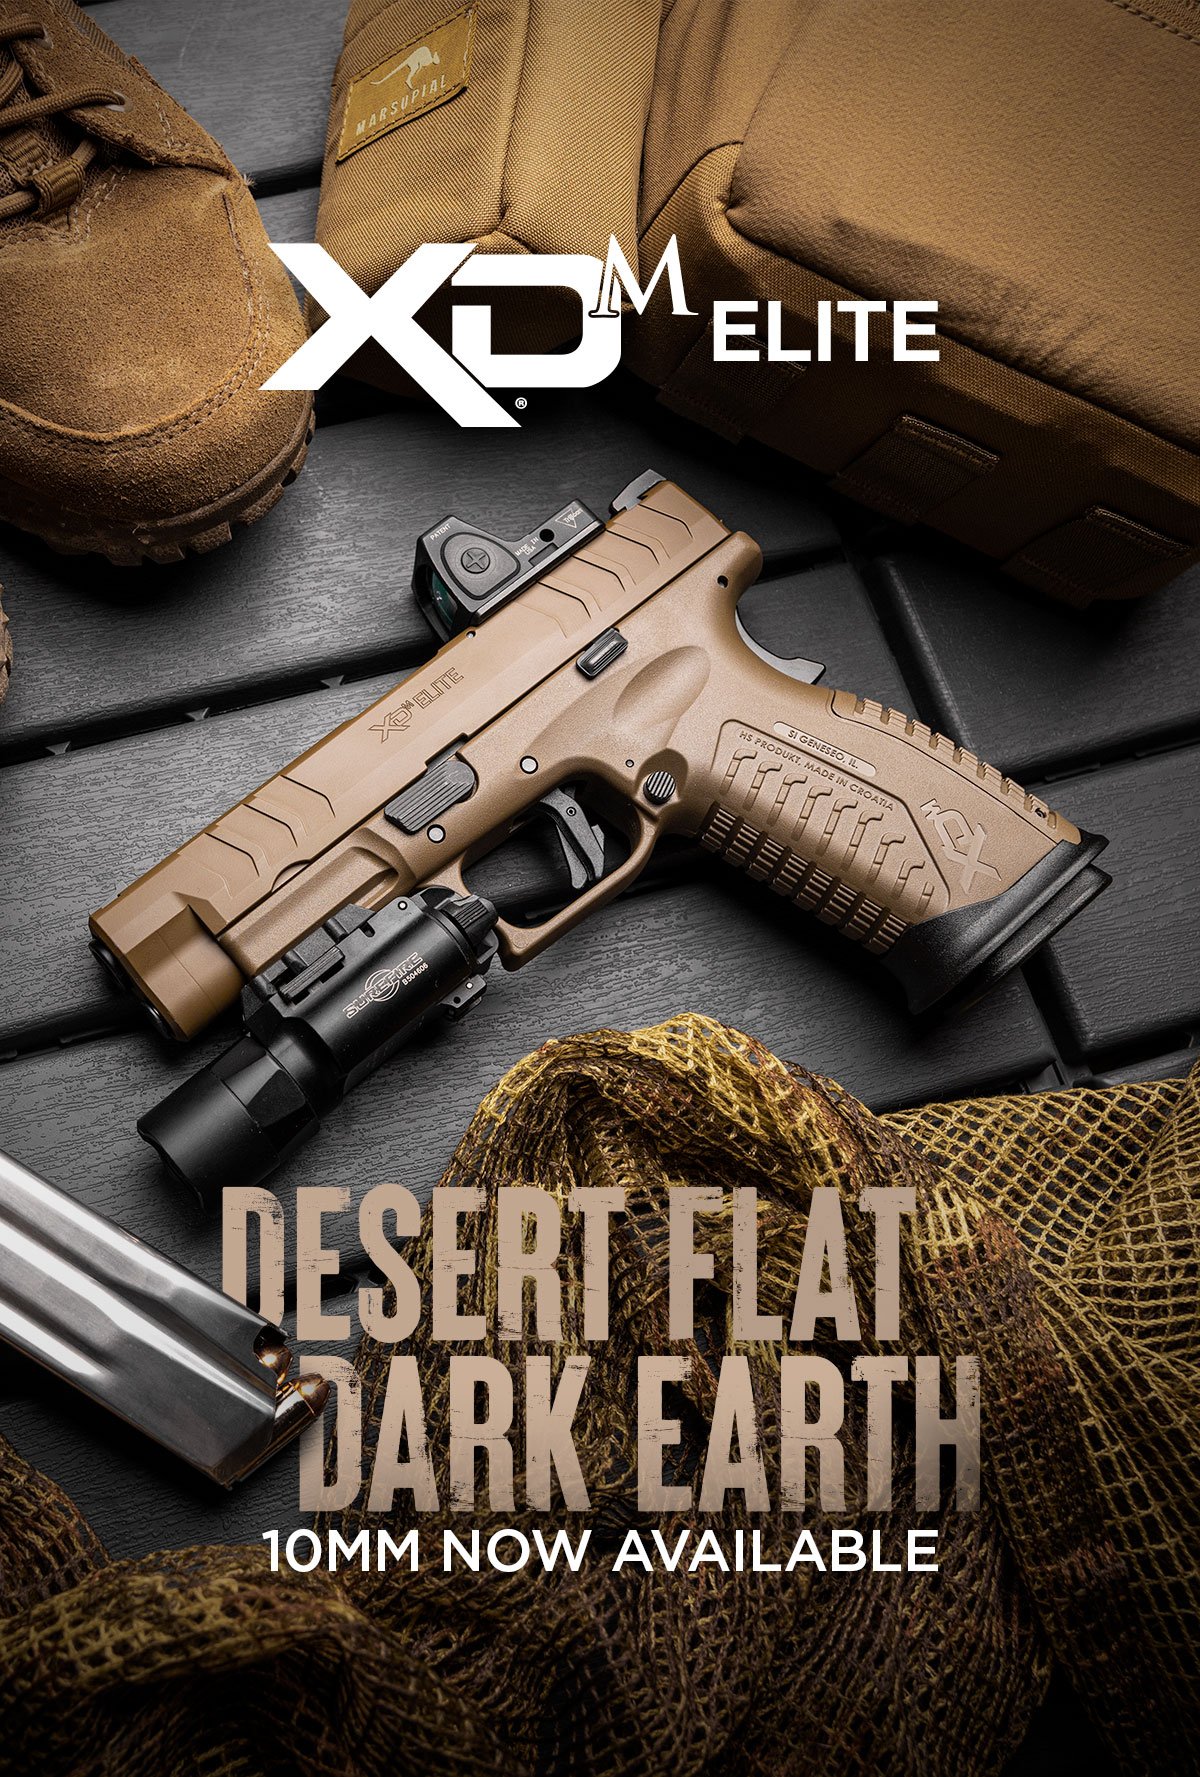 xdm-elite-desert-fde-10mm-header-1200-1